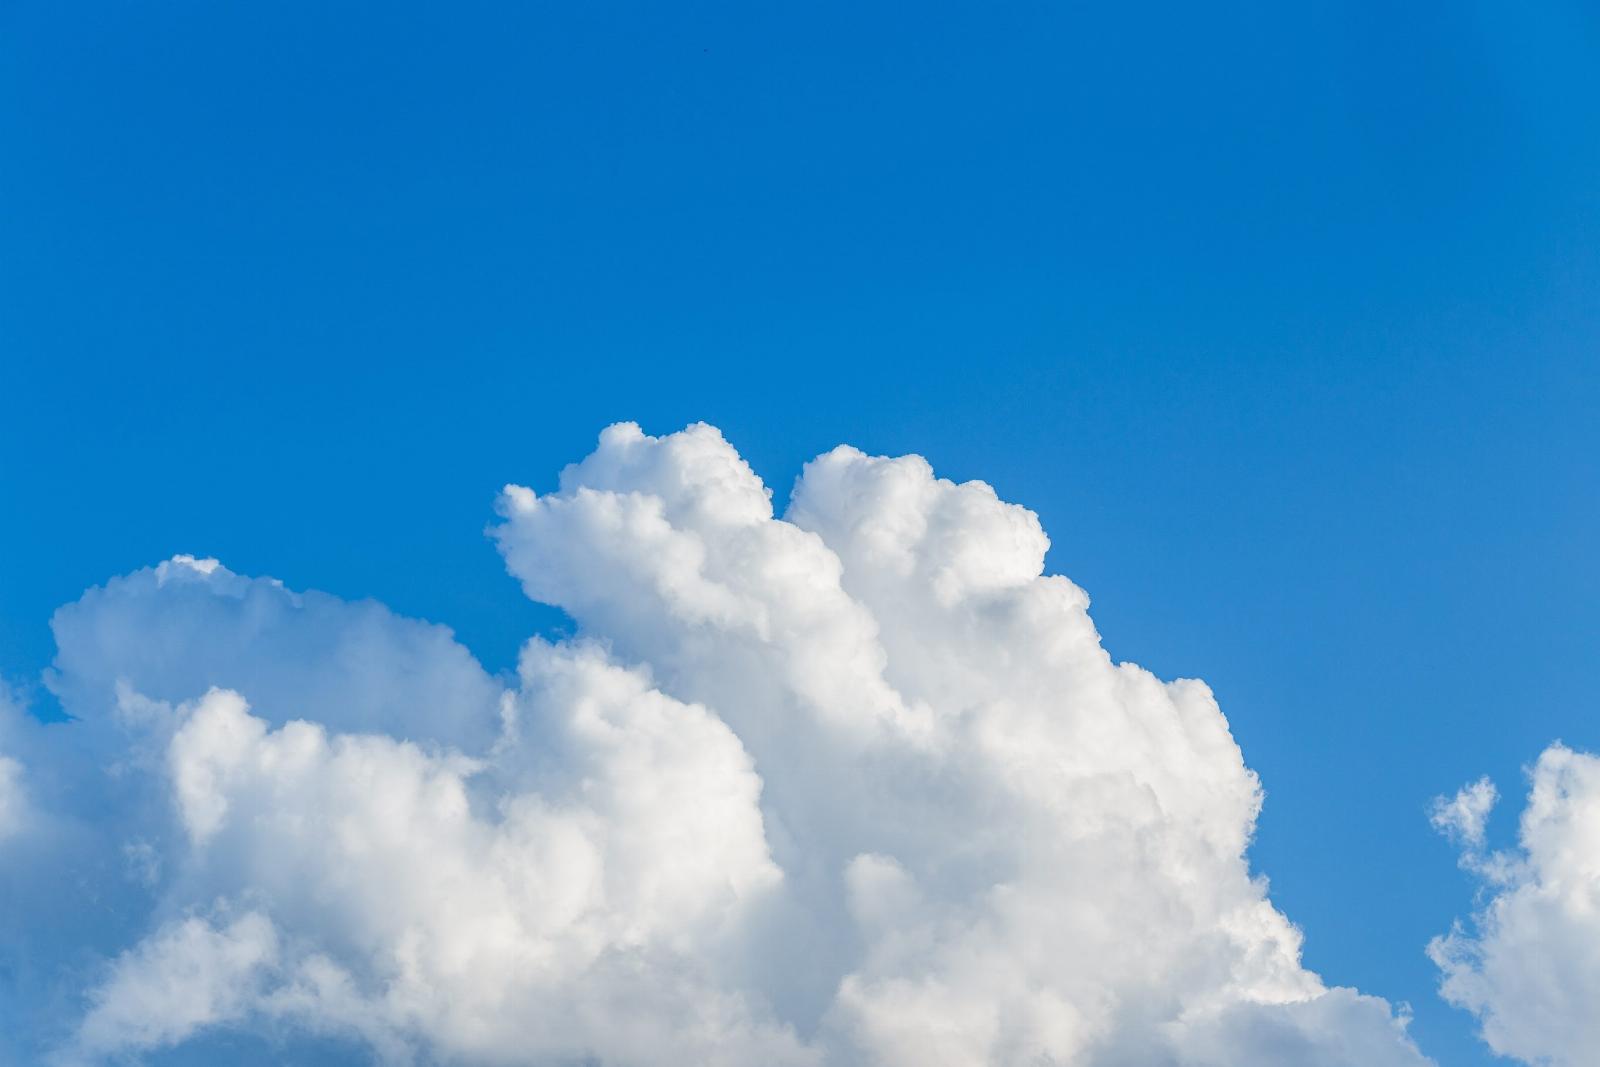 Exostellar raises $15M to help companies optimize their cloud spend